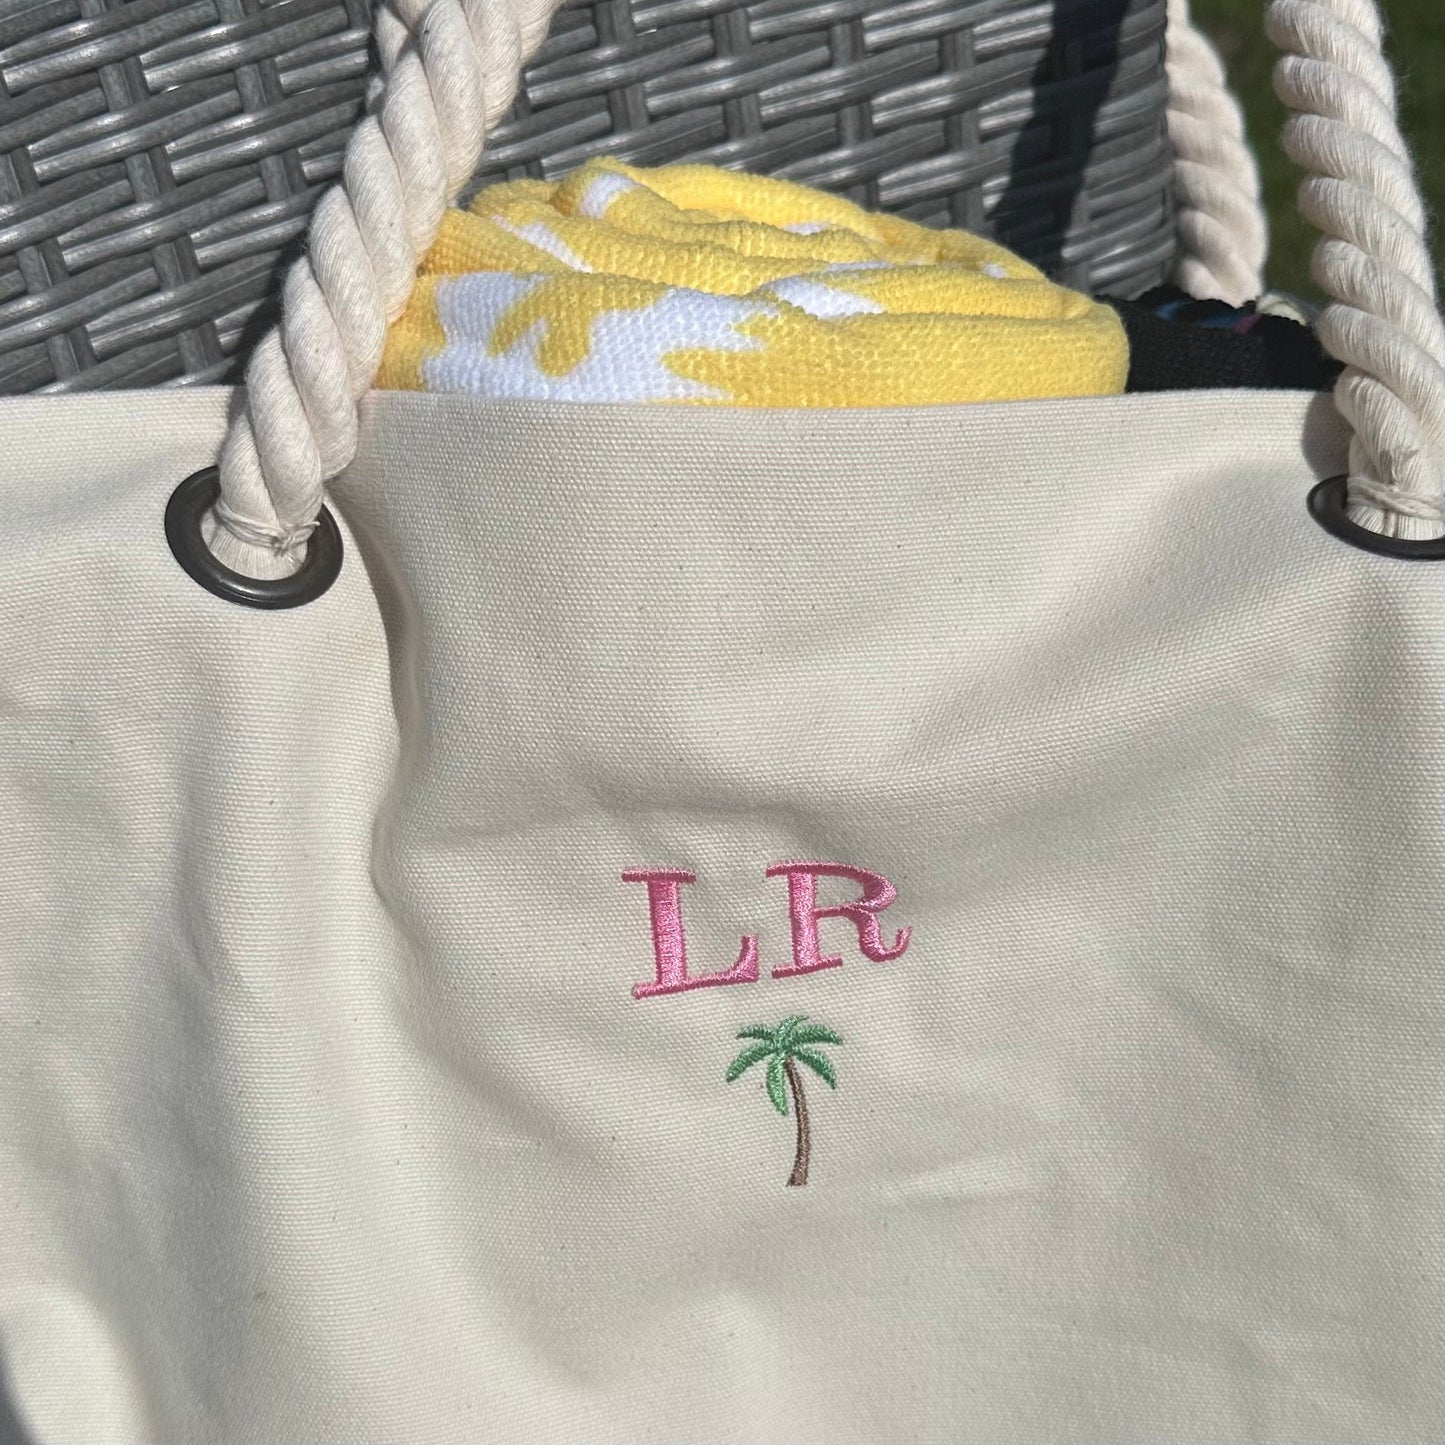 Personalised Beach Bag